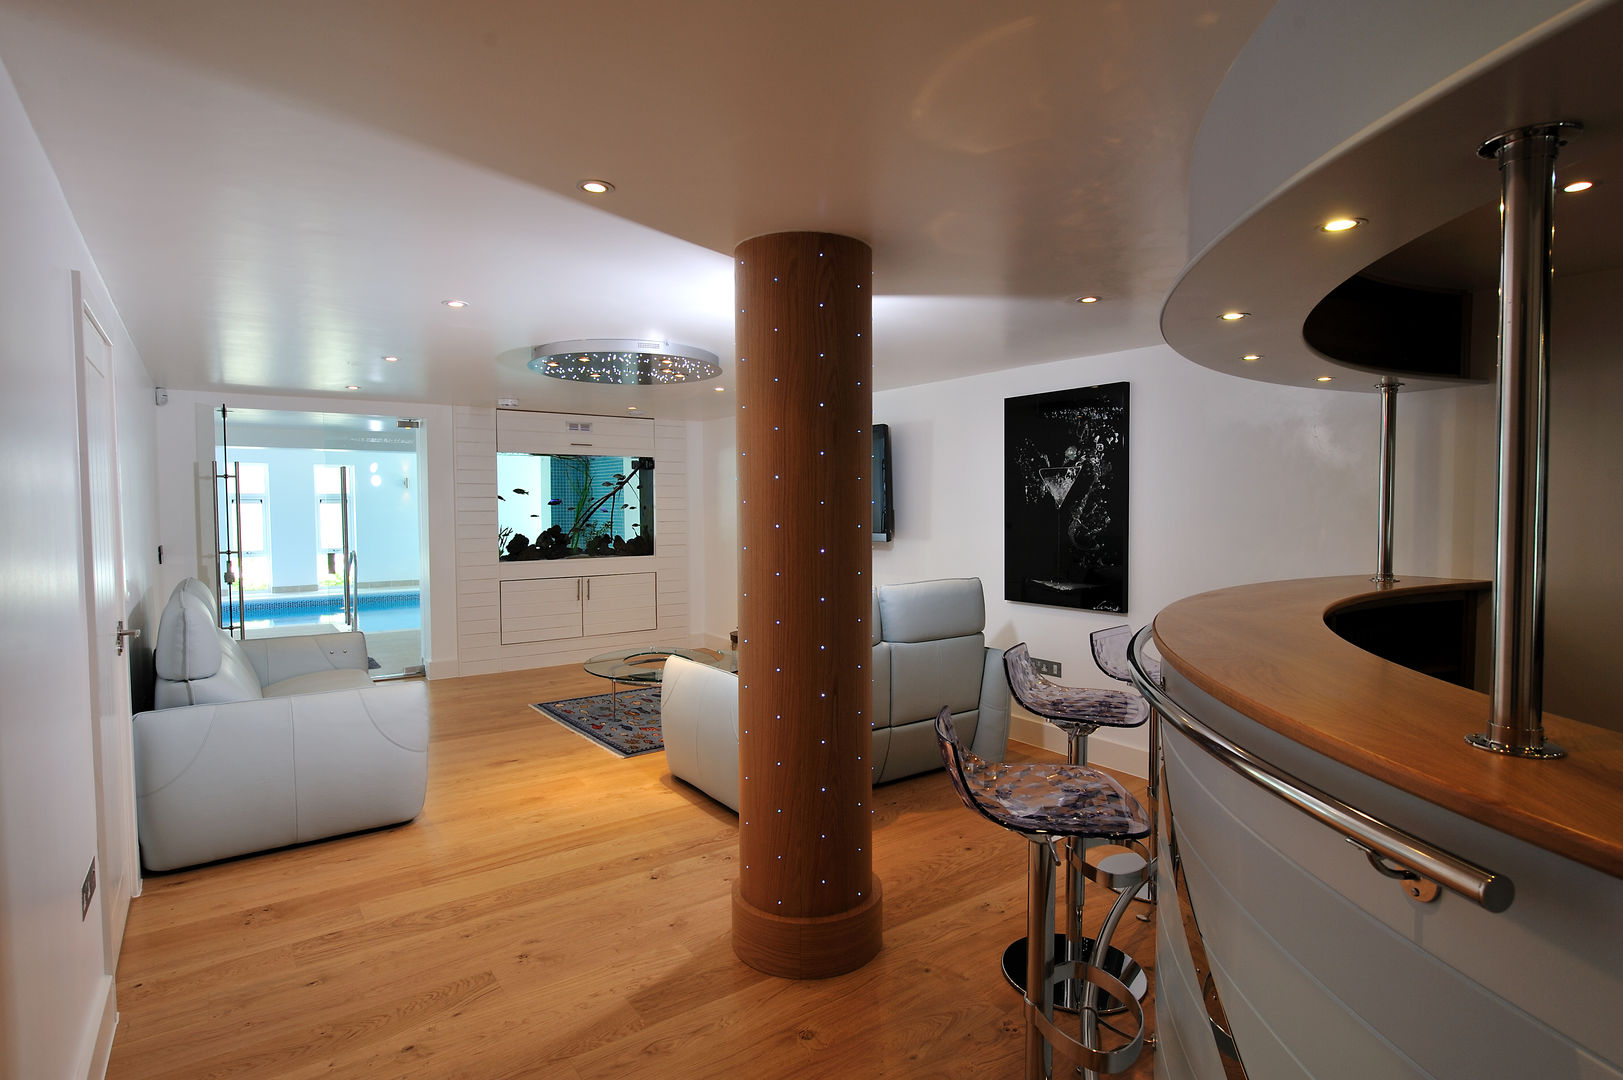 Sea House, Porth | Cornwall, Perfect Stays Perfect Stays ห้องสันทนาการ Cinema room,bar,media room,fish tank,holiday home,beach house,interior,lighting,luxury